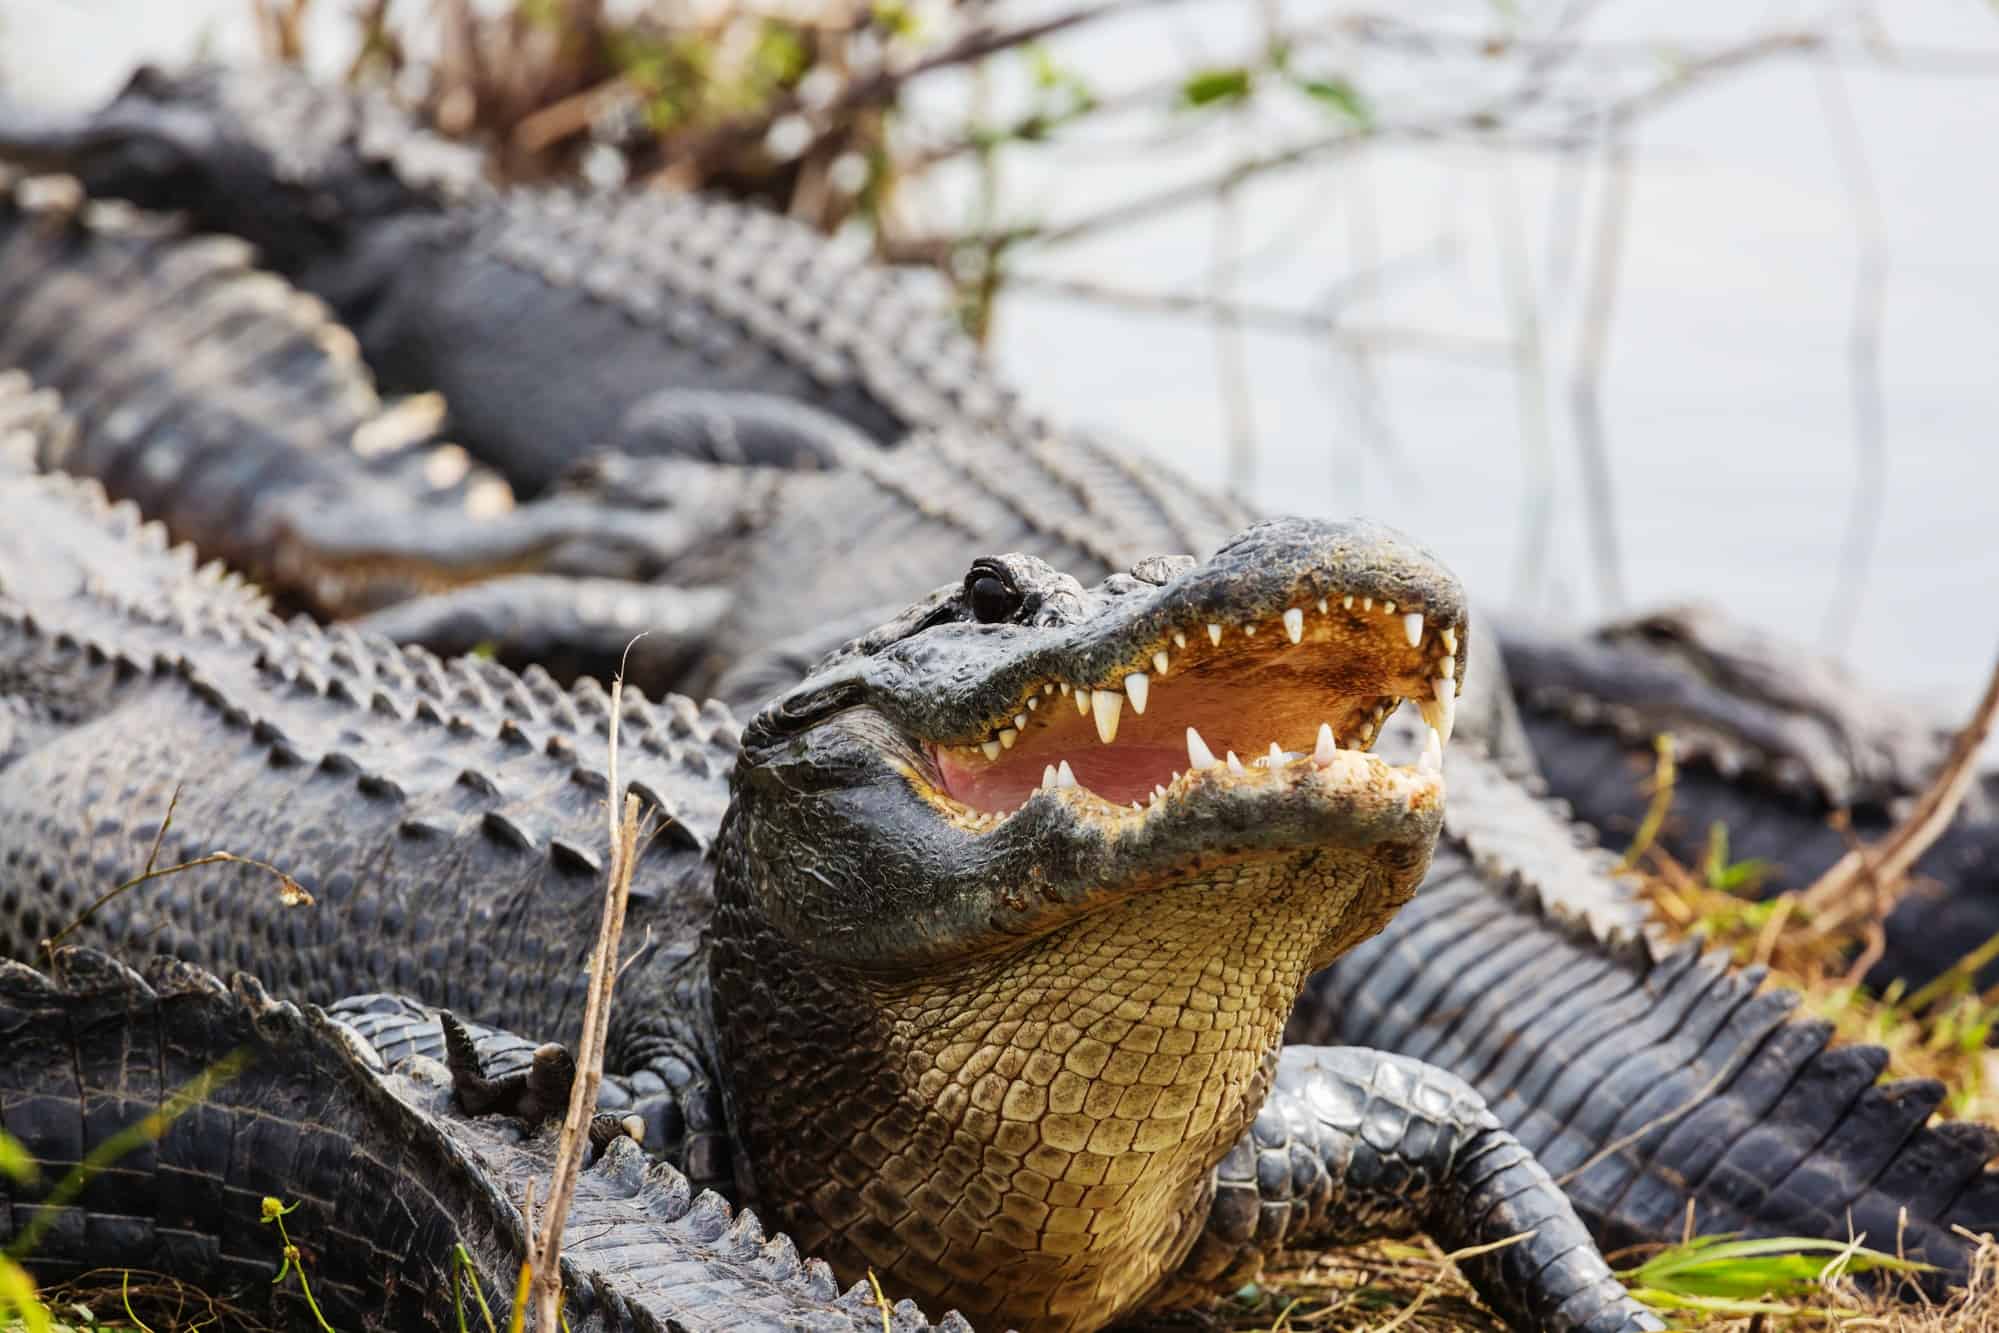 Everglades Alligator Farm Ticket